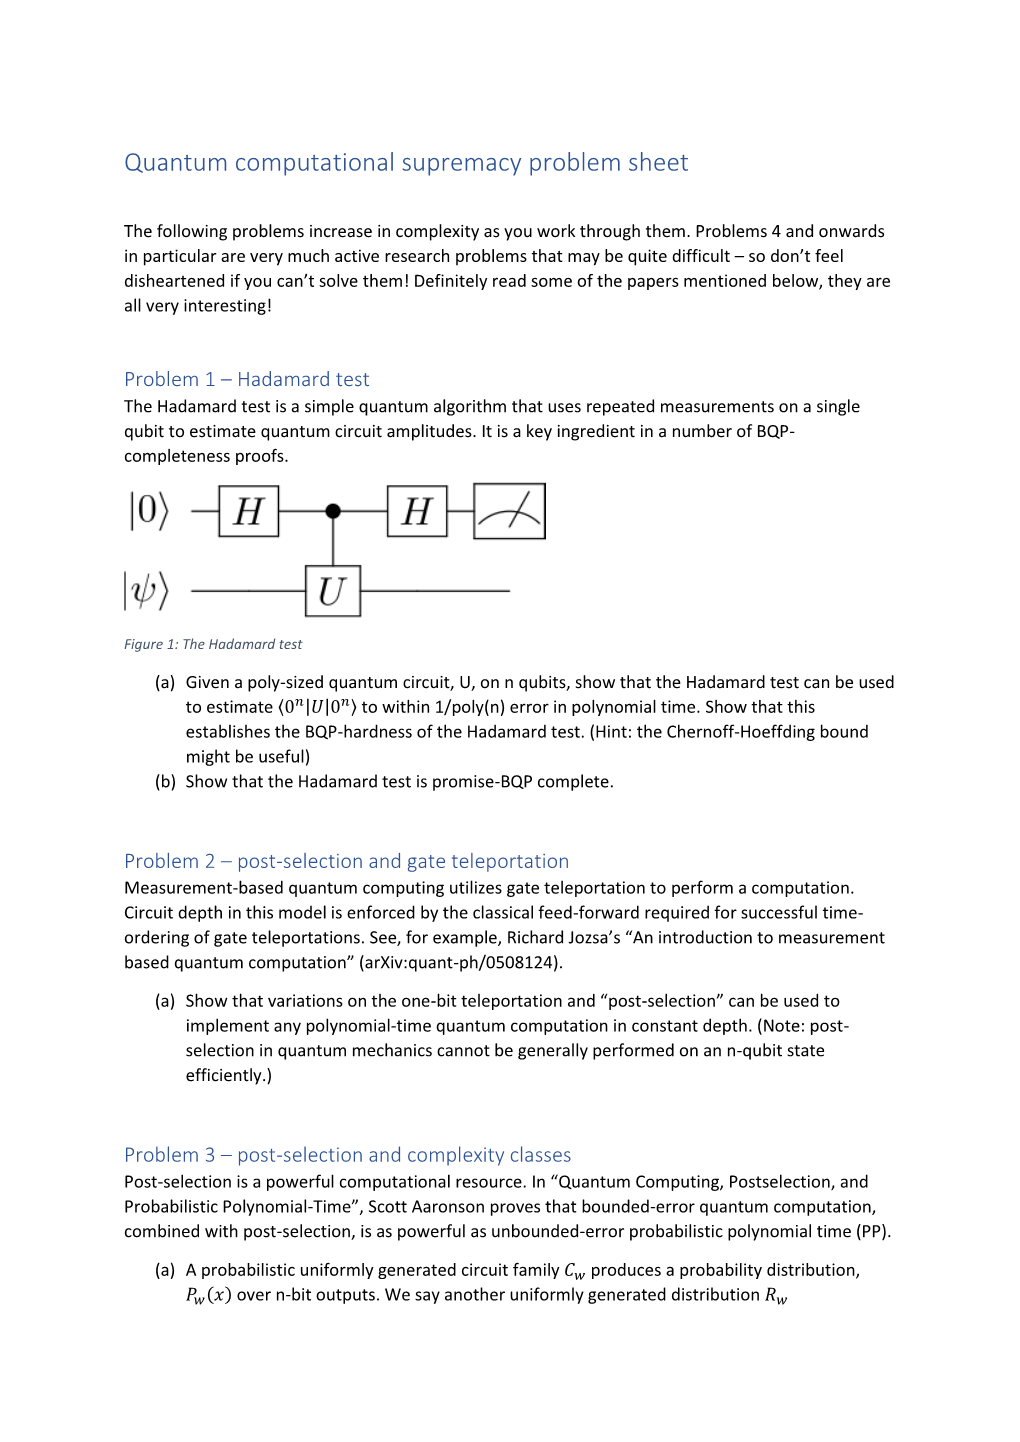 Quantum Computational Supremacy Problem Sheet